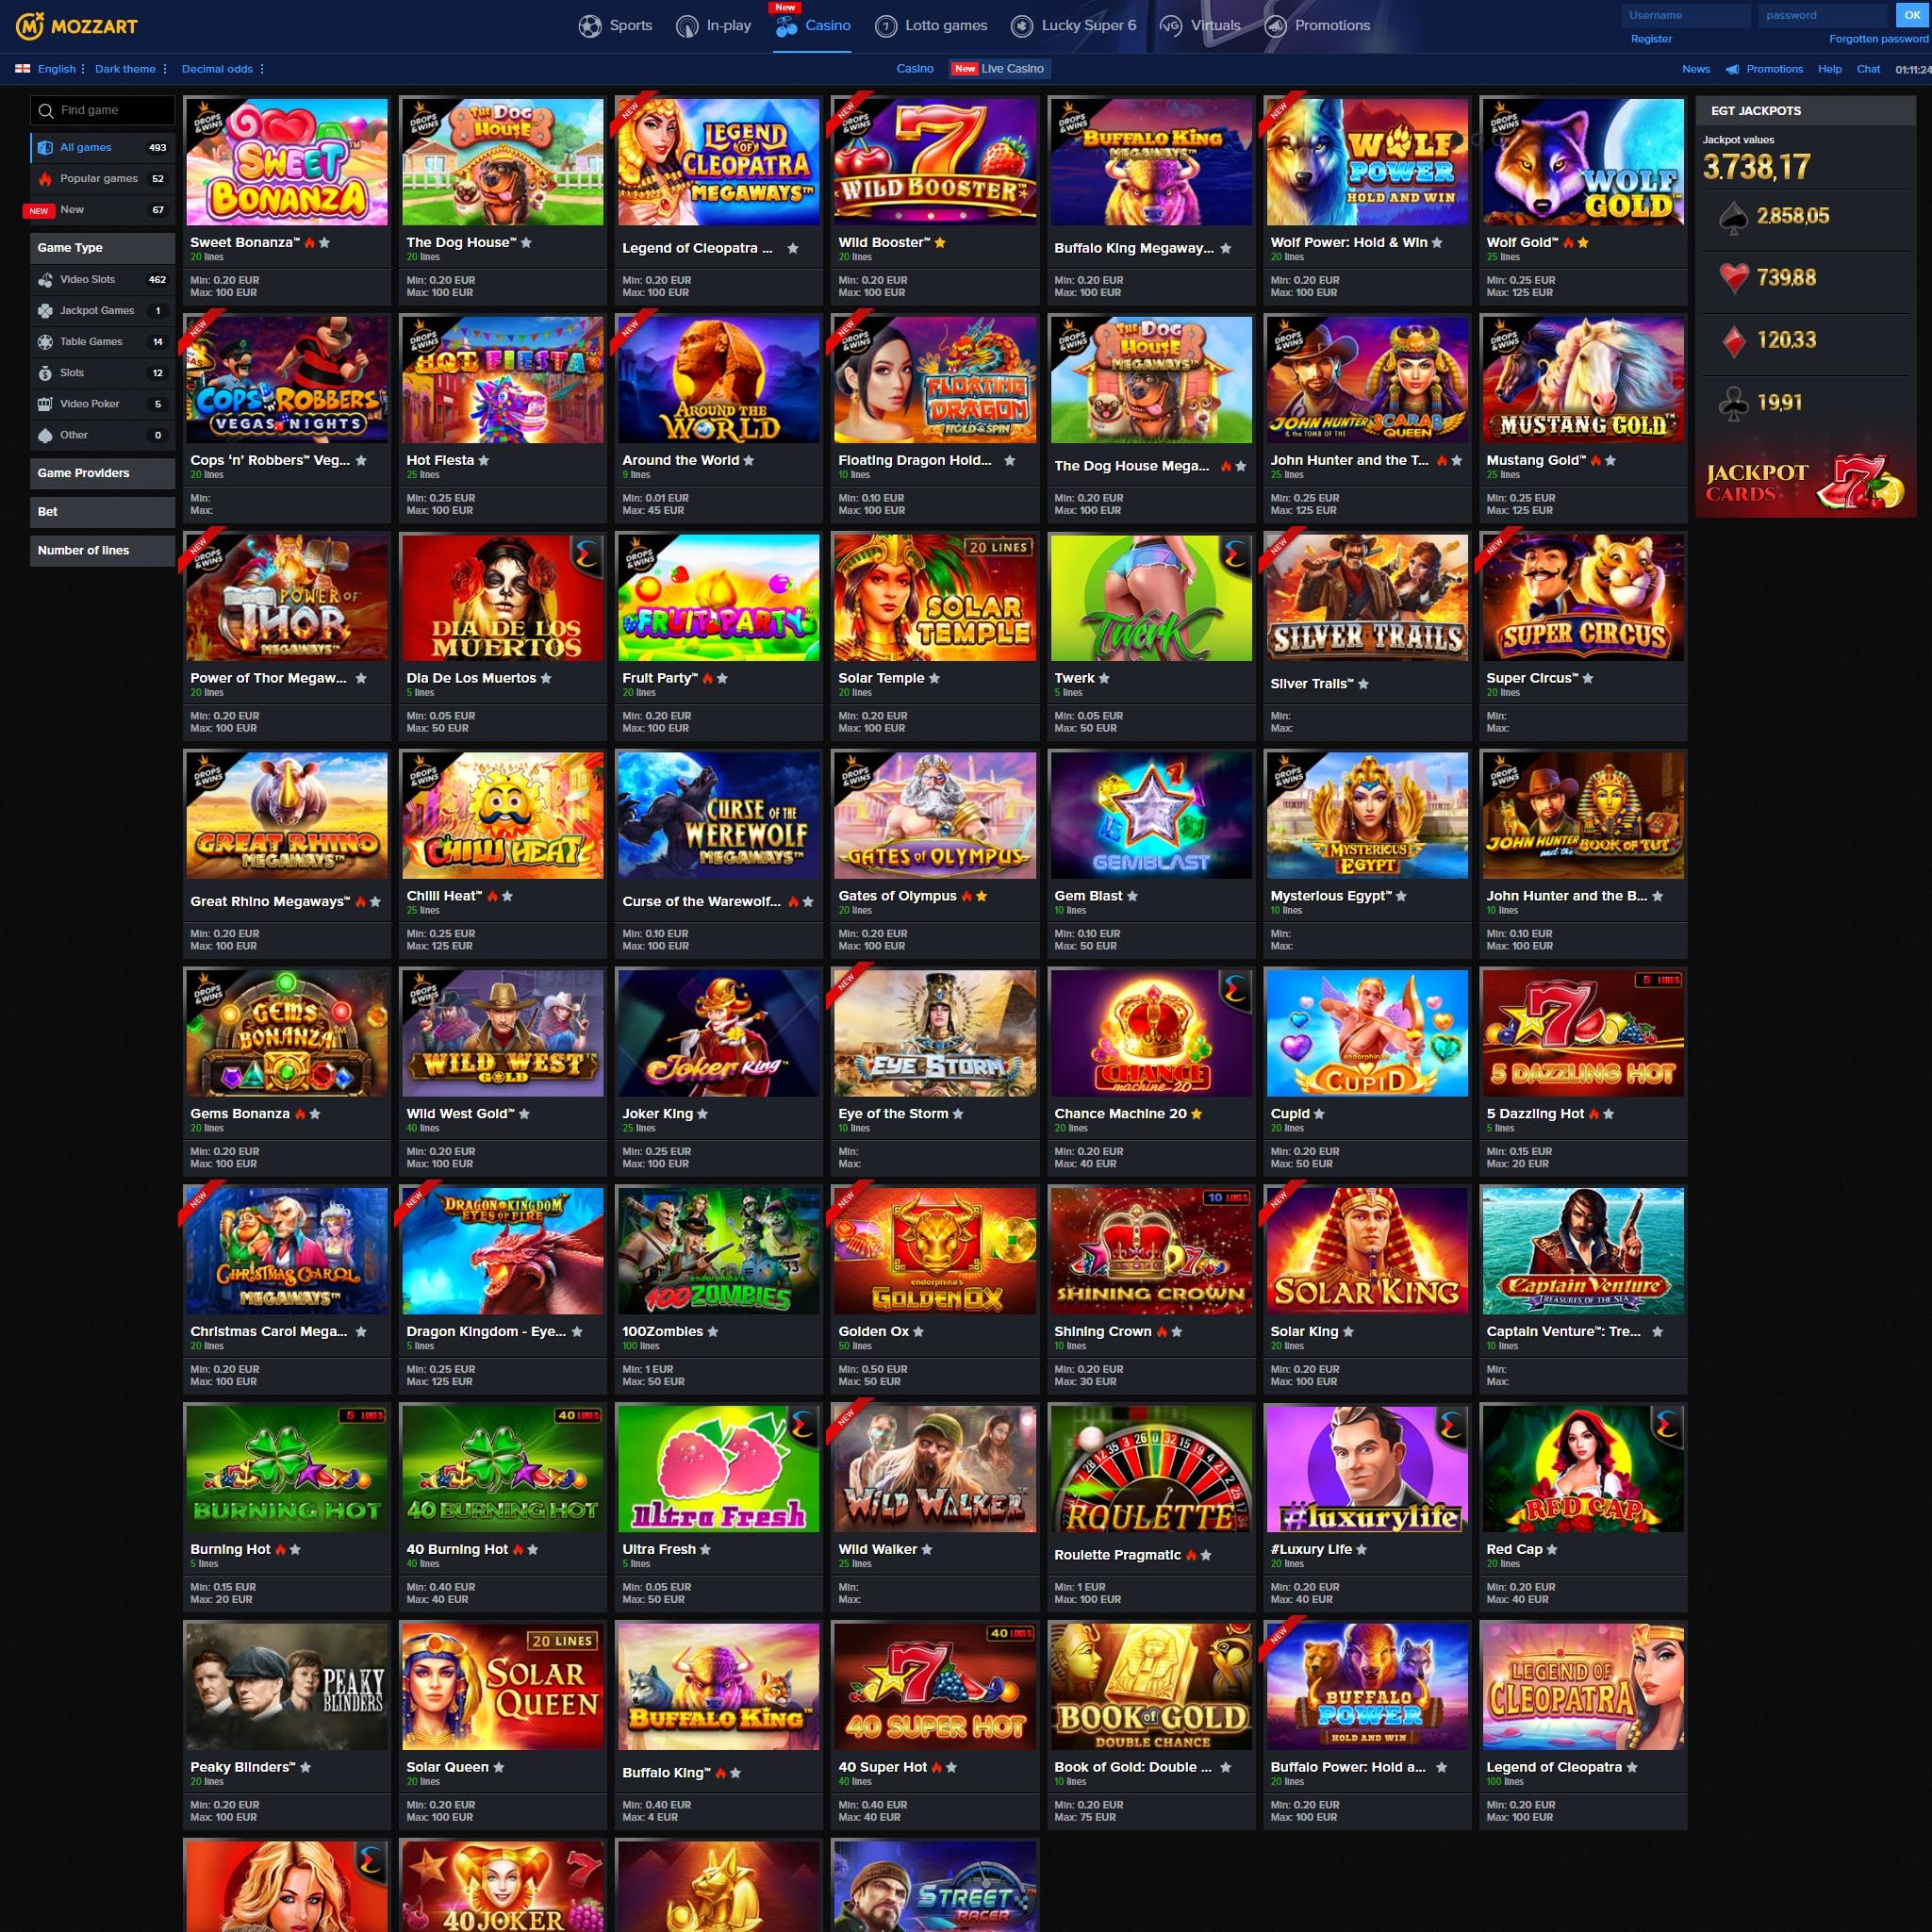 Mozzart Casino full games catalogue